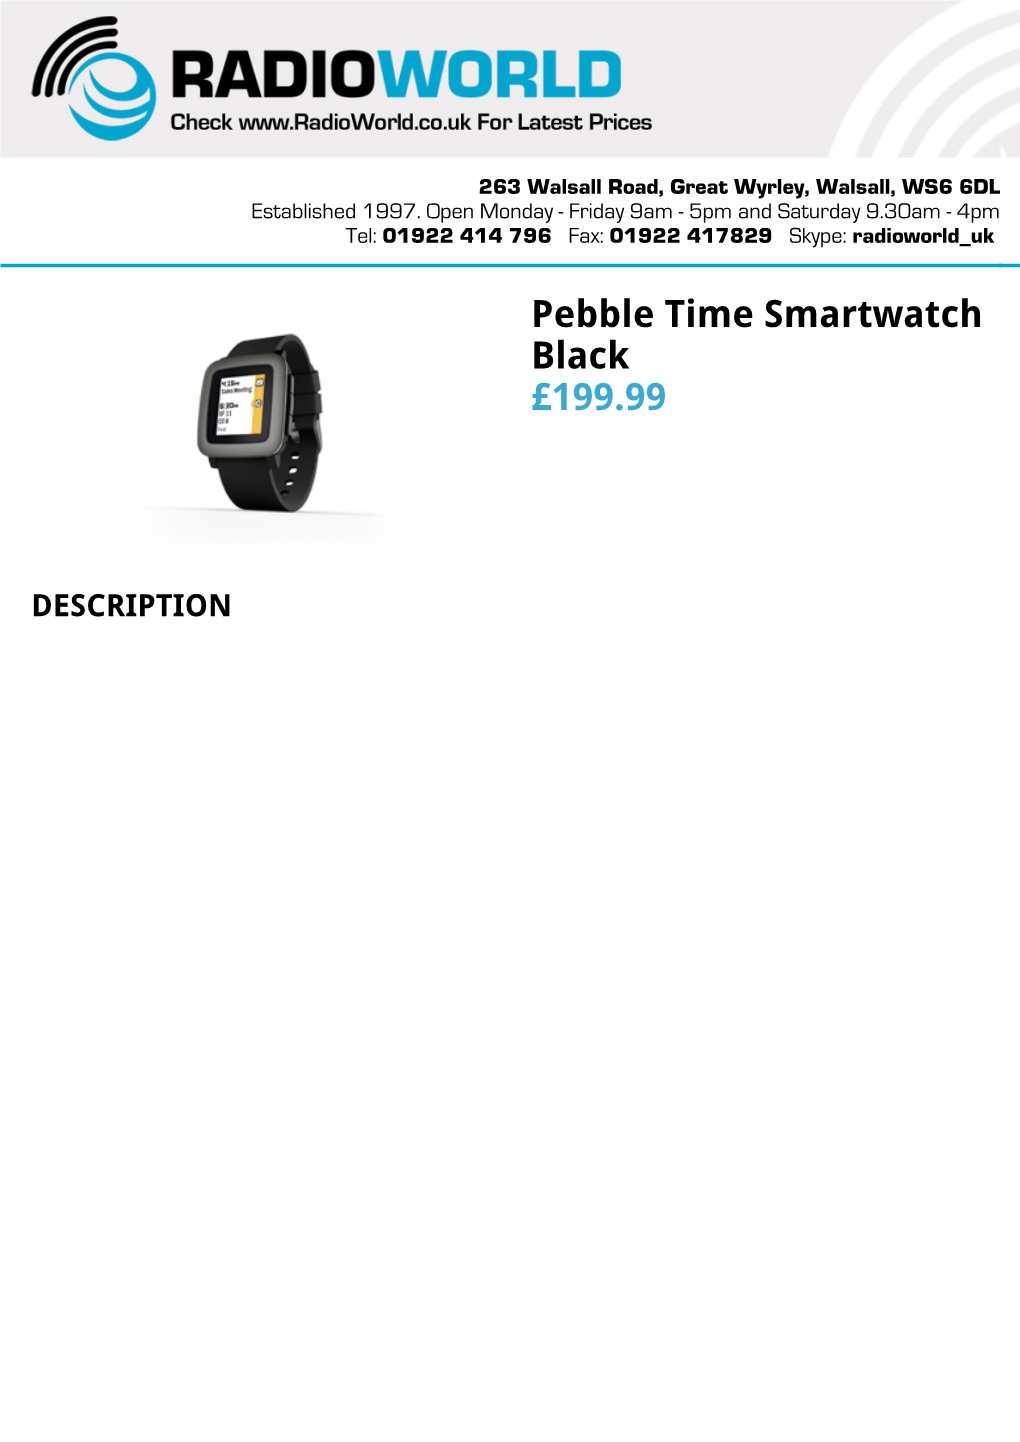 Pebble Time Smartwatch Black £199.99